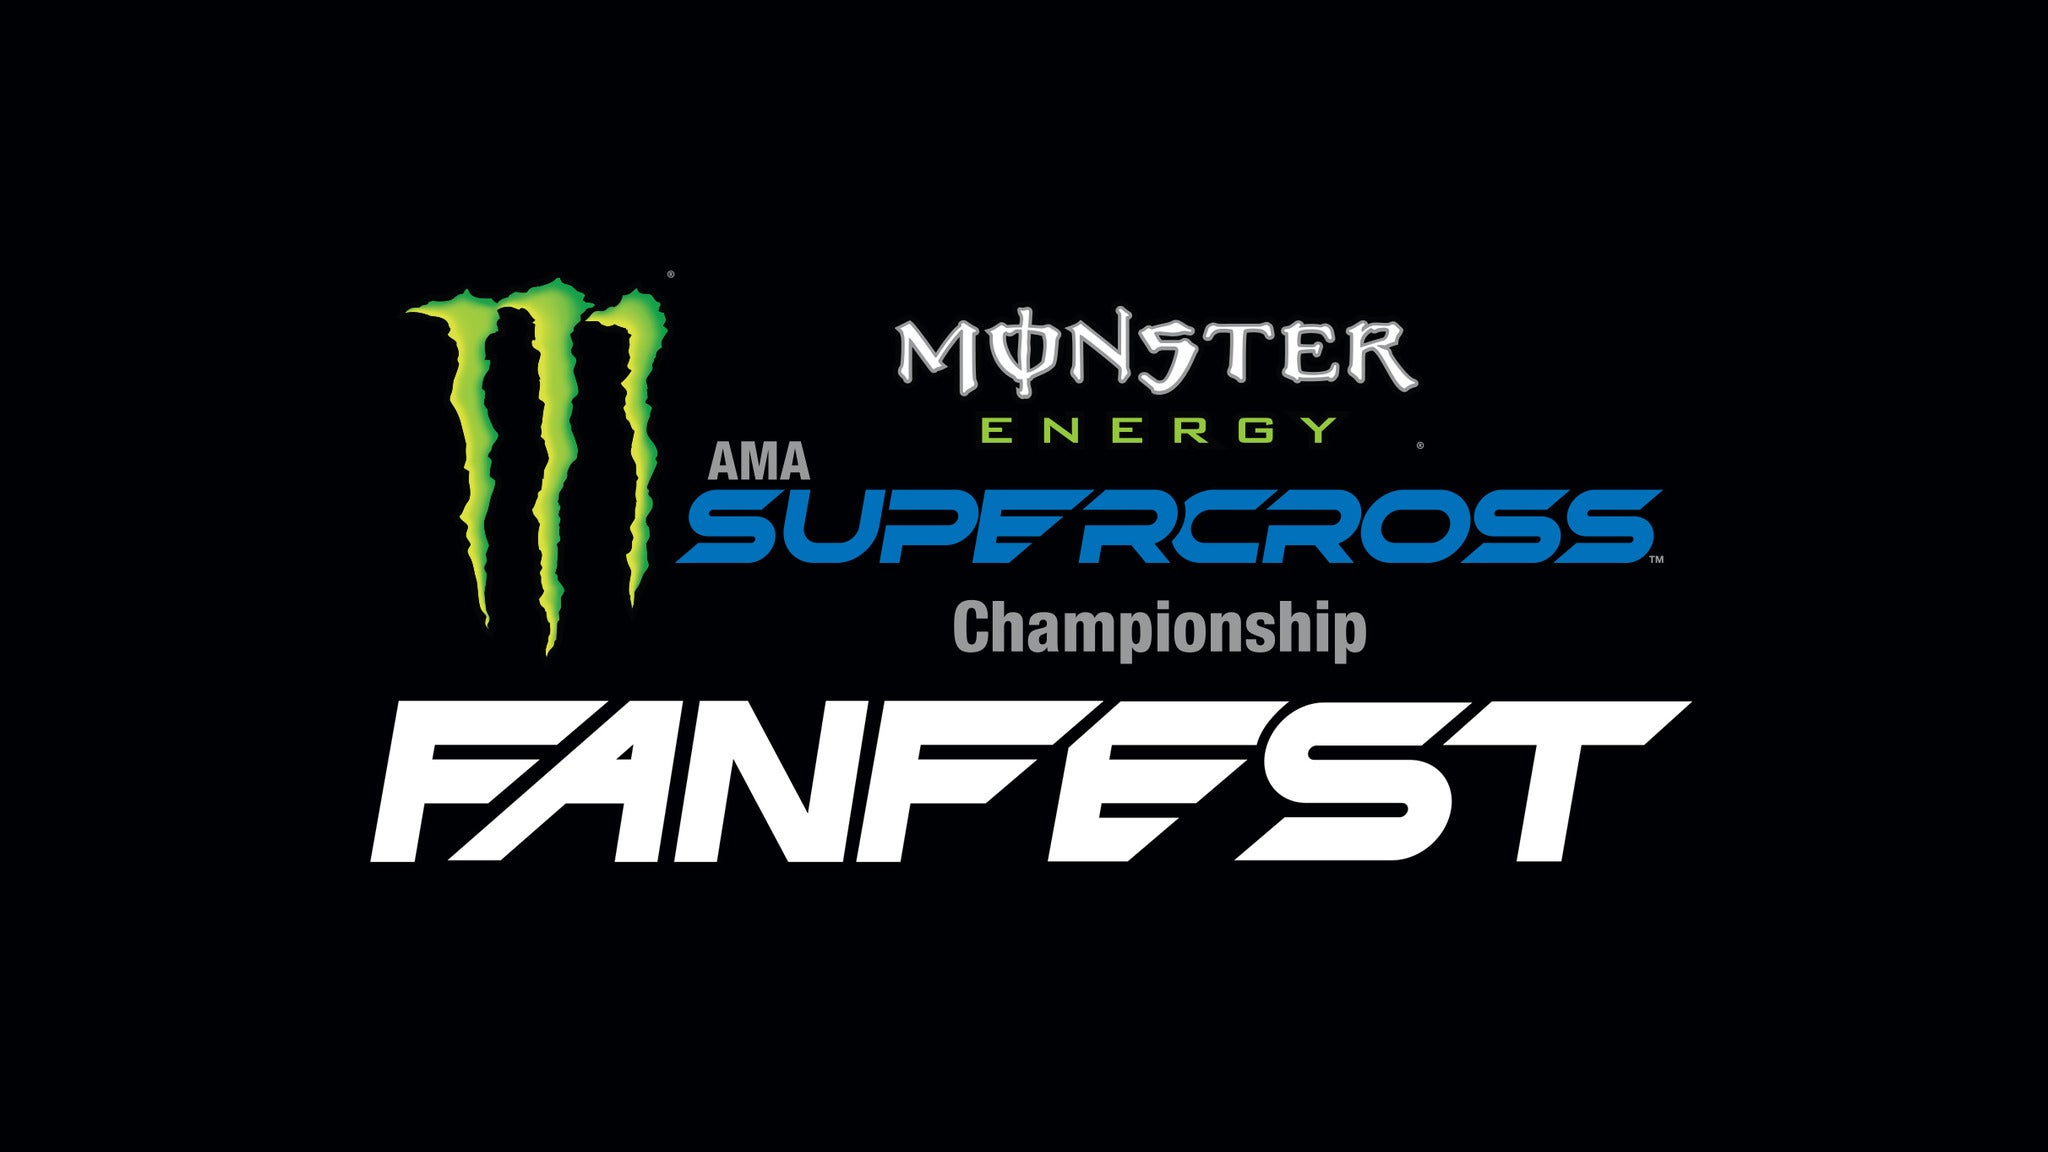 Supercross Fan Fest in Salt Lake City promo photo for TM / Venue presale offer code